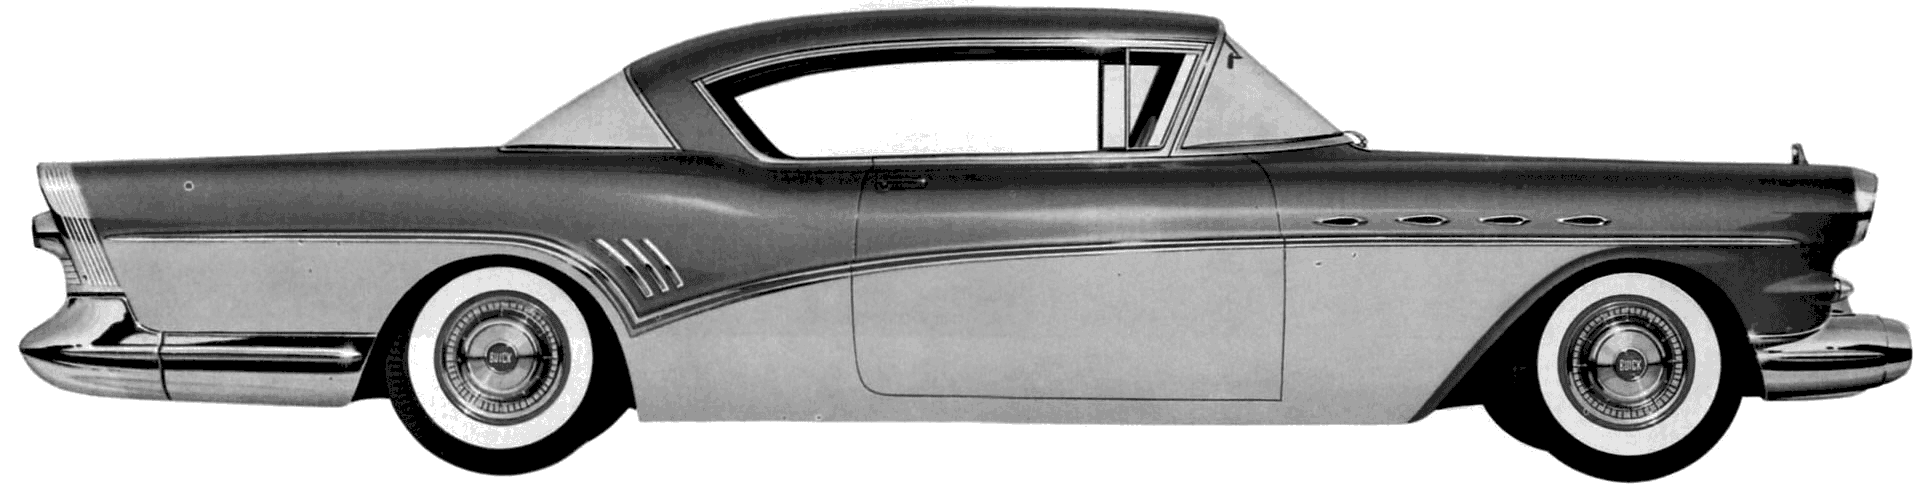 Mašīna Buick Super Riviera Hardtop 1957 